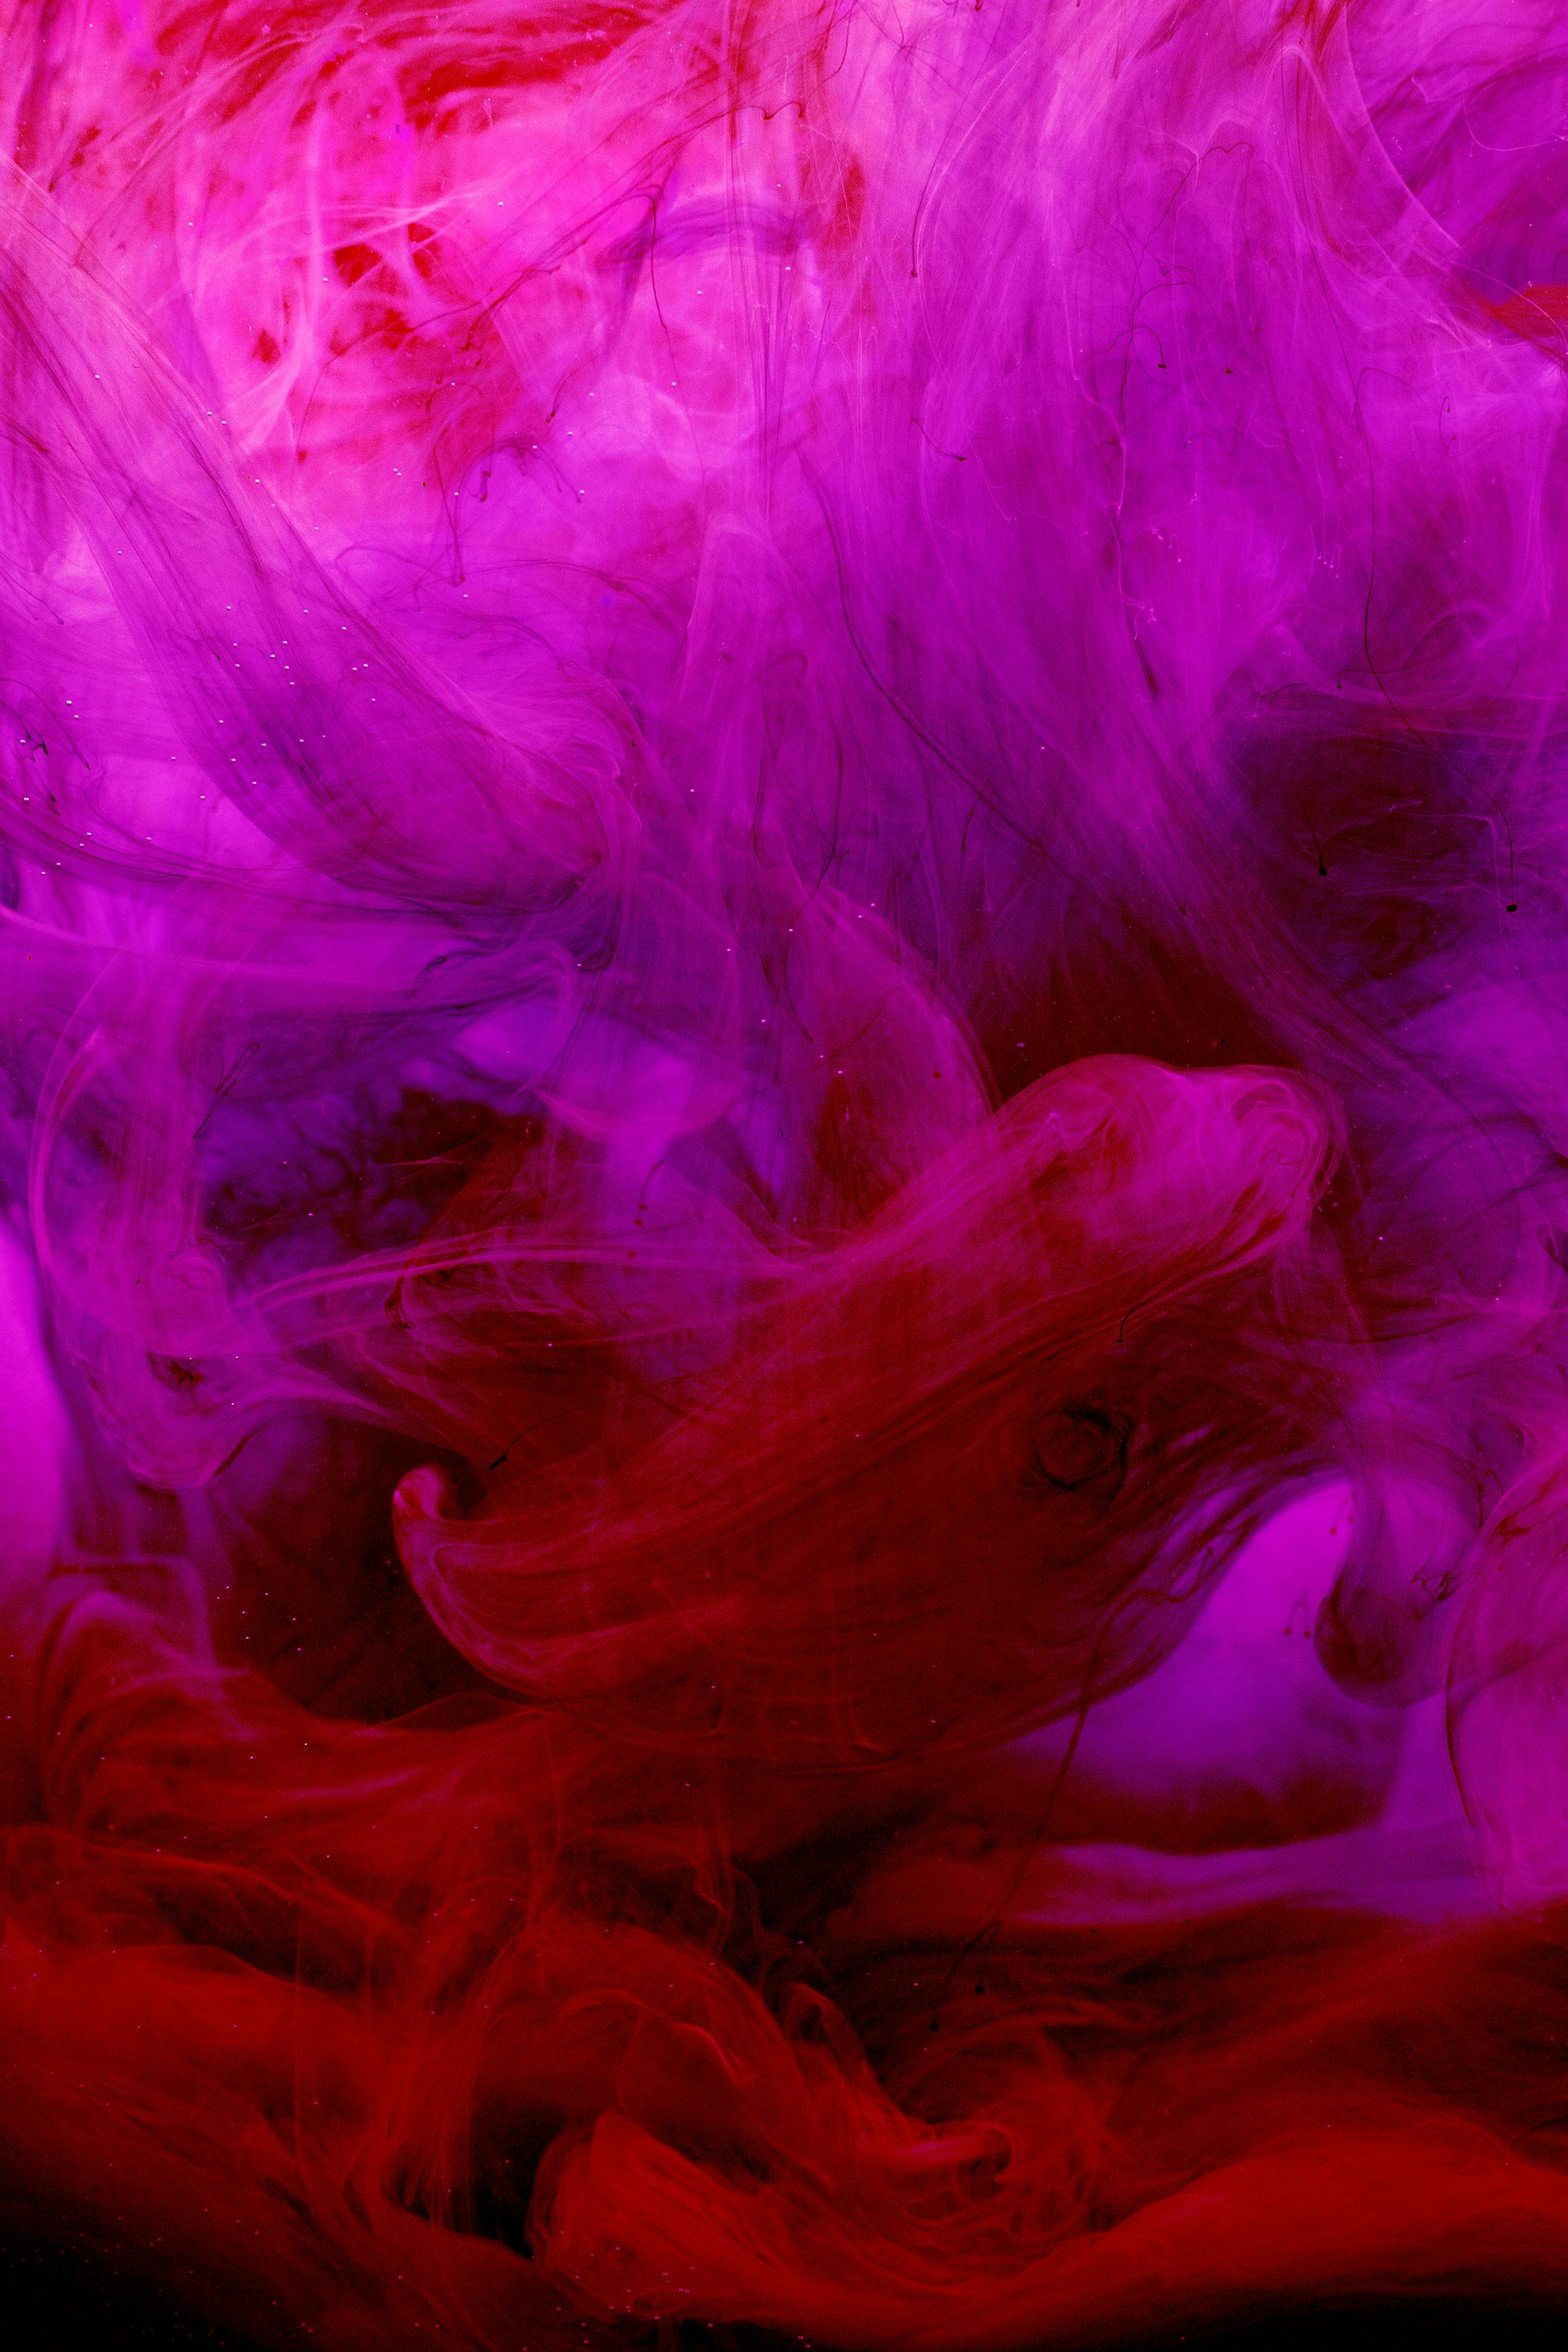 Purple and Red Smoke Illustration · Free Stock Photo